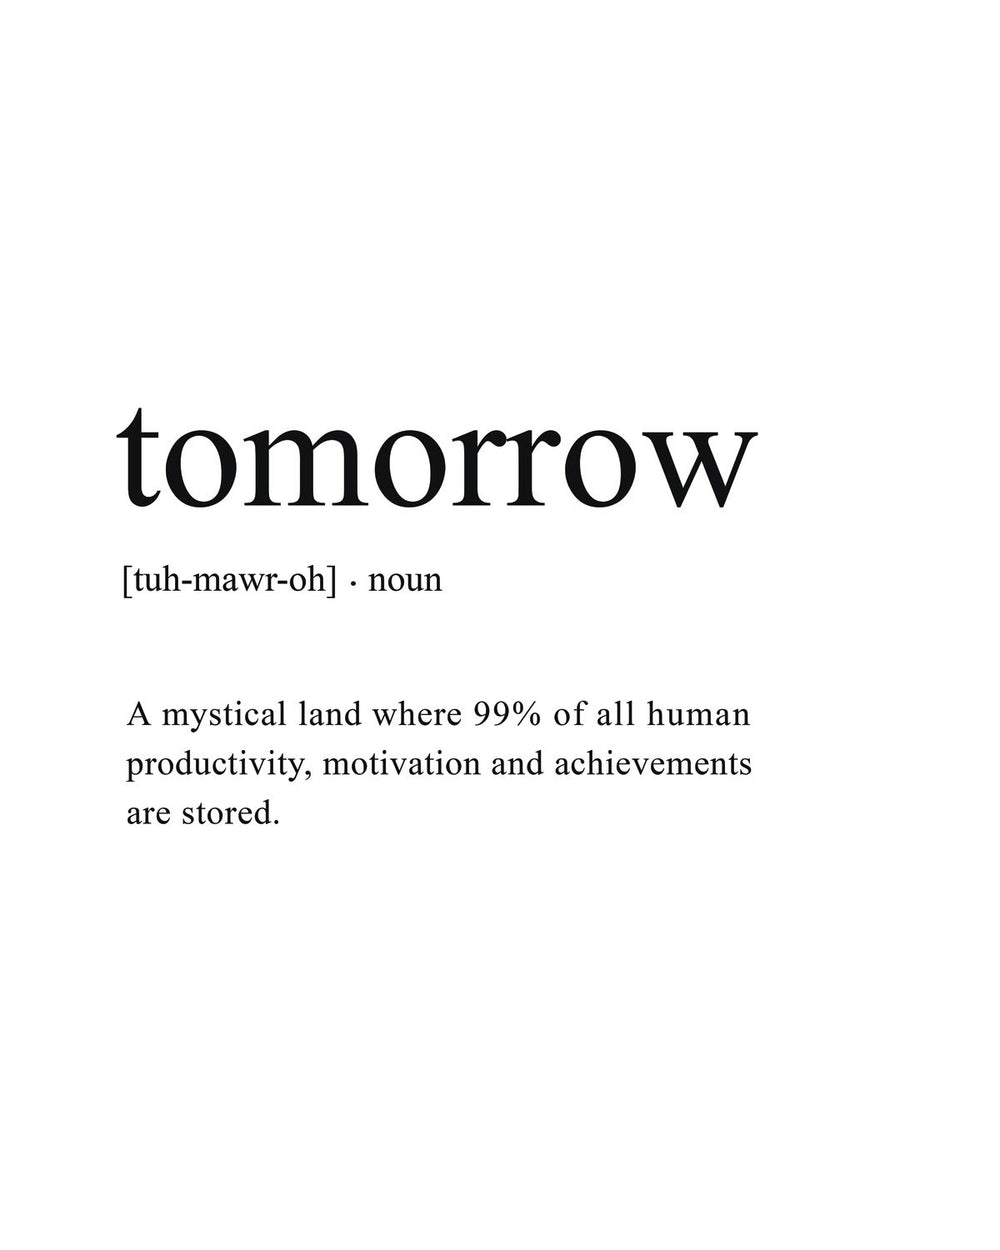 Tomorrow Definition Typography